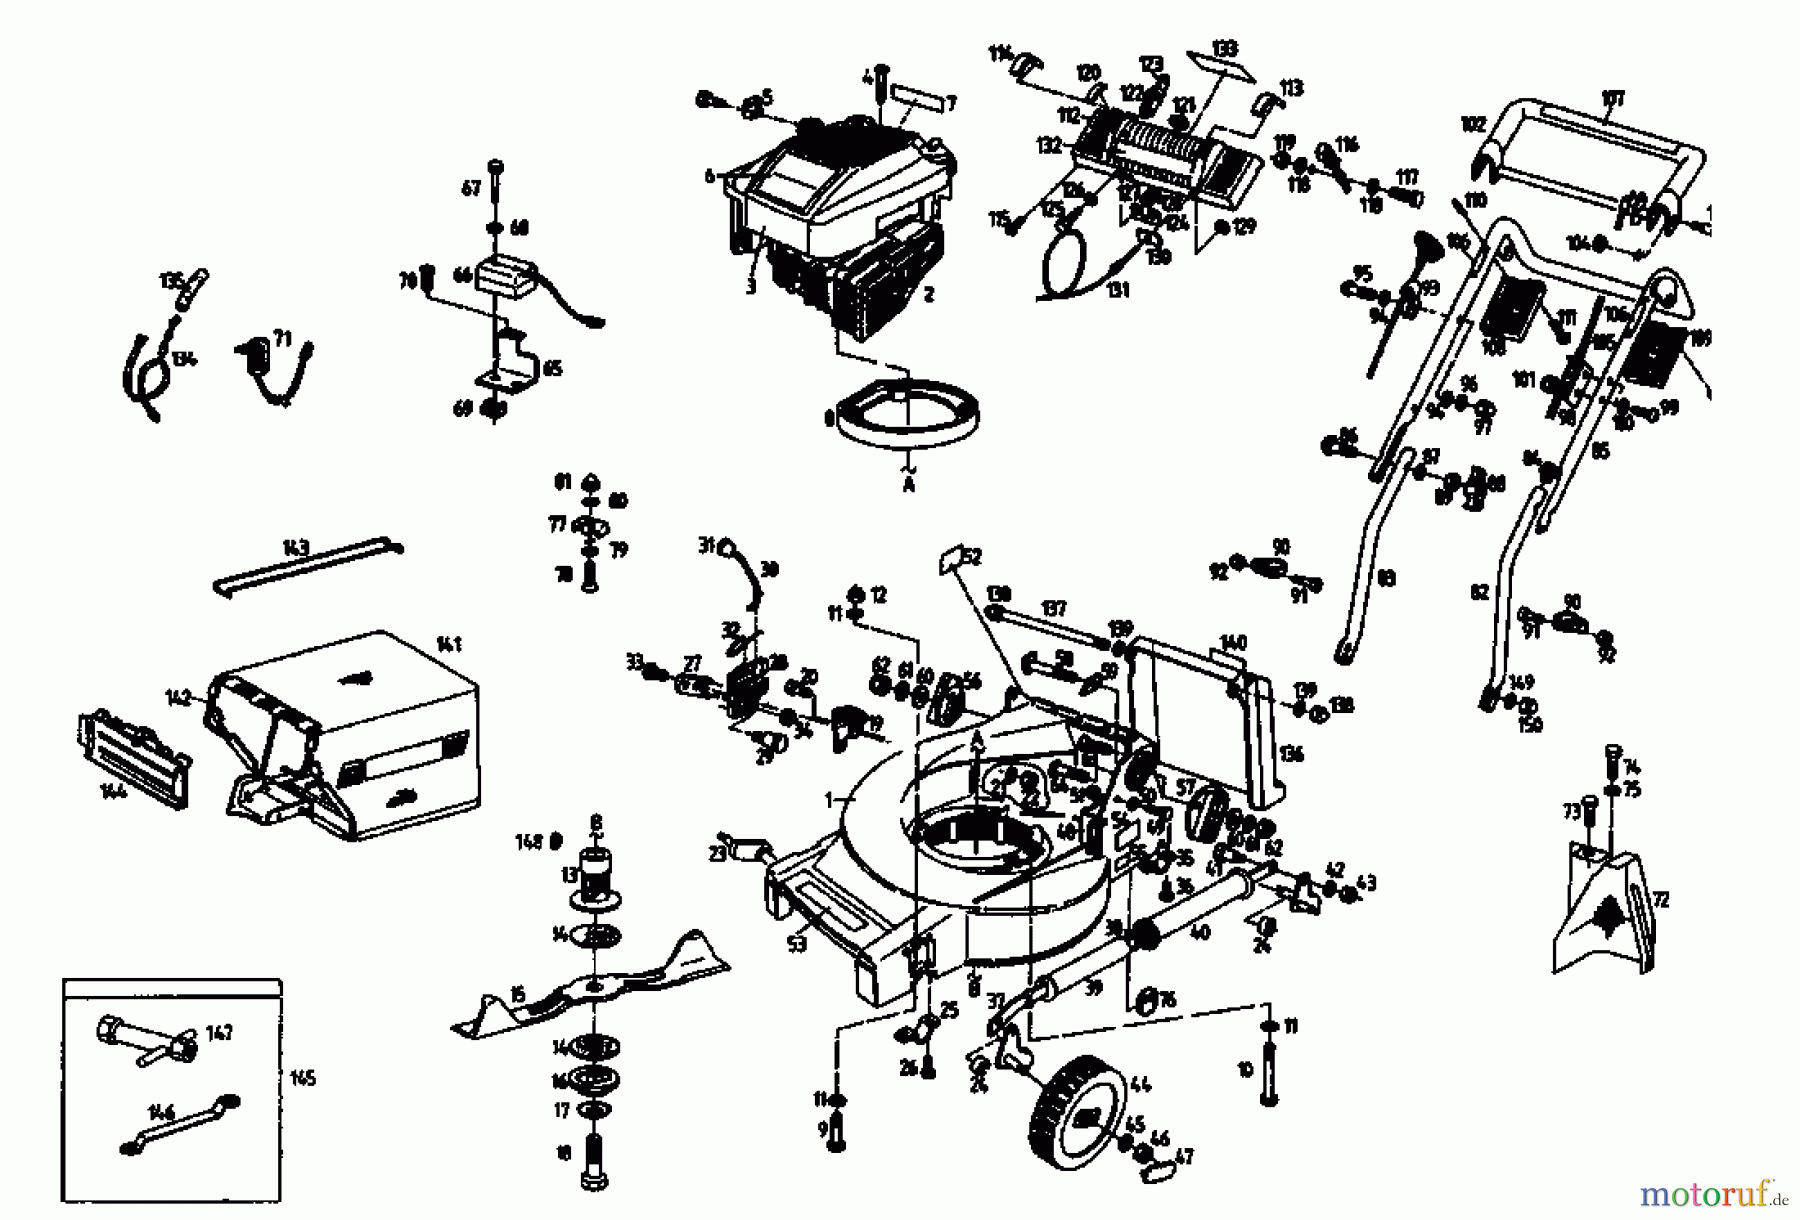  Gutbrod Petrol mower MH 454 SEB 04023.01  (1994) Basic machine